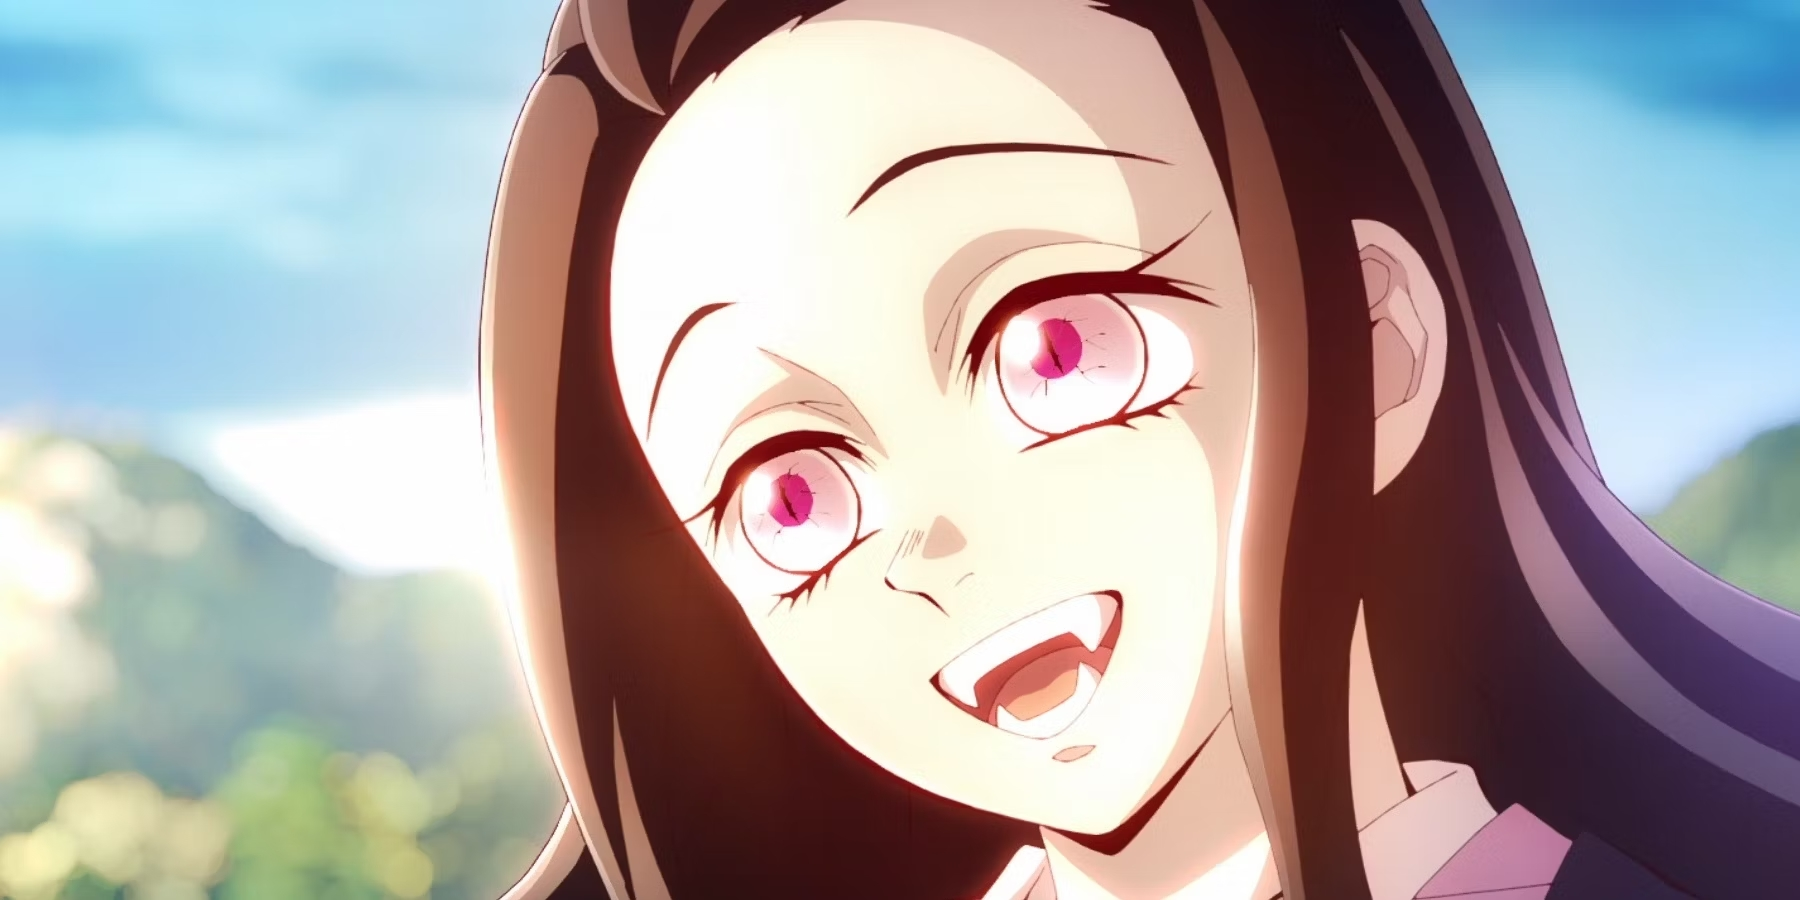 Nezuko smiles, showing her fangs